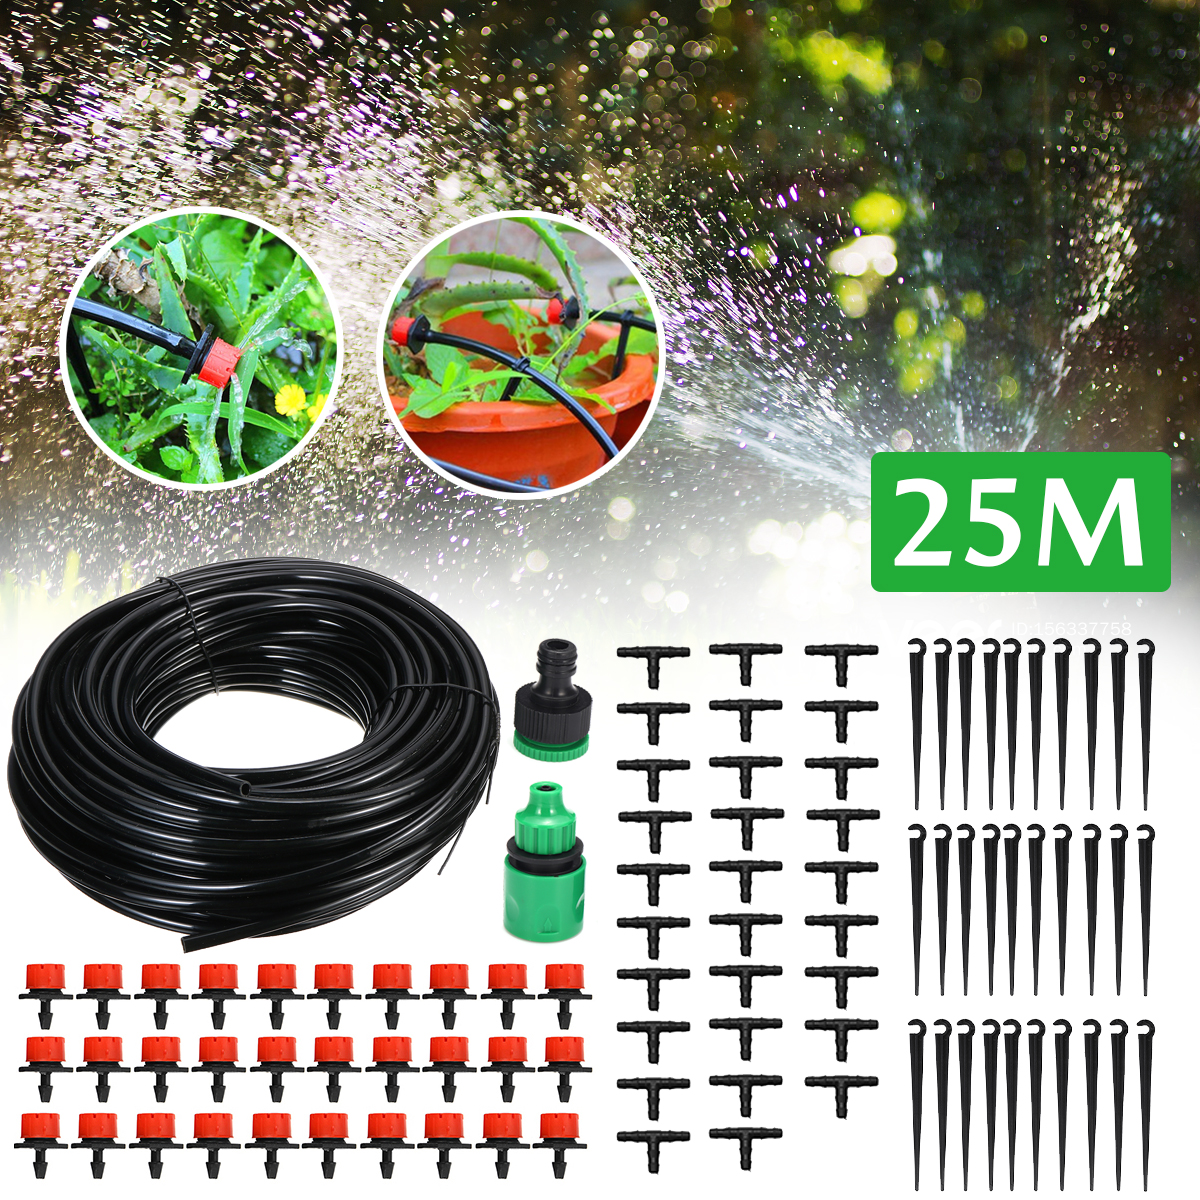 25m-DIY-Plant-Self-Watering-Micro-Drip-Irrigation-System-Garden-Hose-Equipment-Set-for-Garden-Greenh-1853899-1